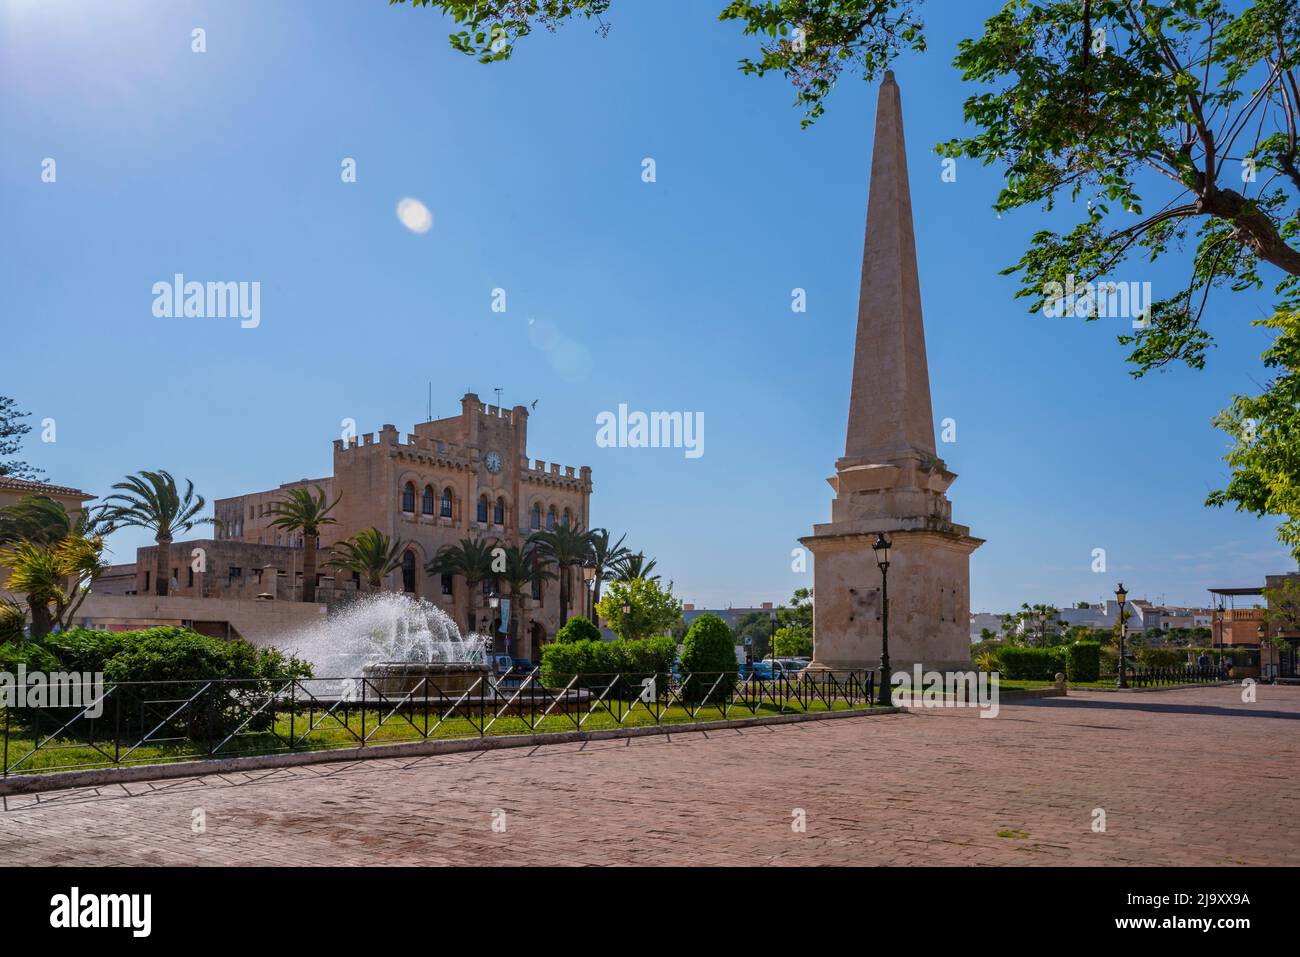 View of the Obelisc de Ciutadella and Town Hall in Placa des Born, Ciutadella, Memorca, Balearic Islands, Spain, Europe Stock Photo